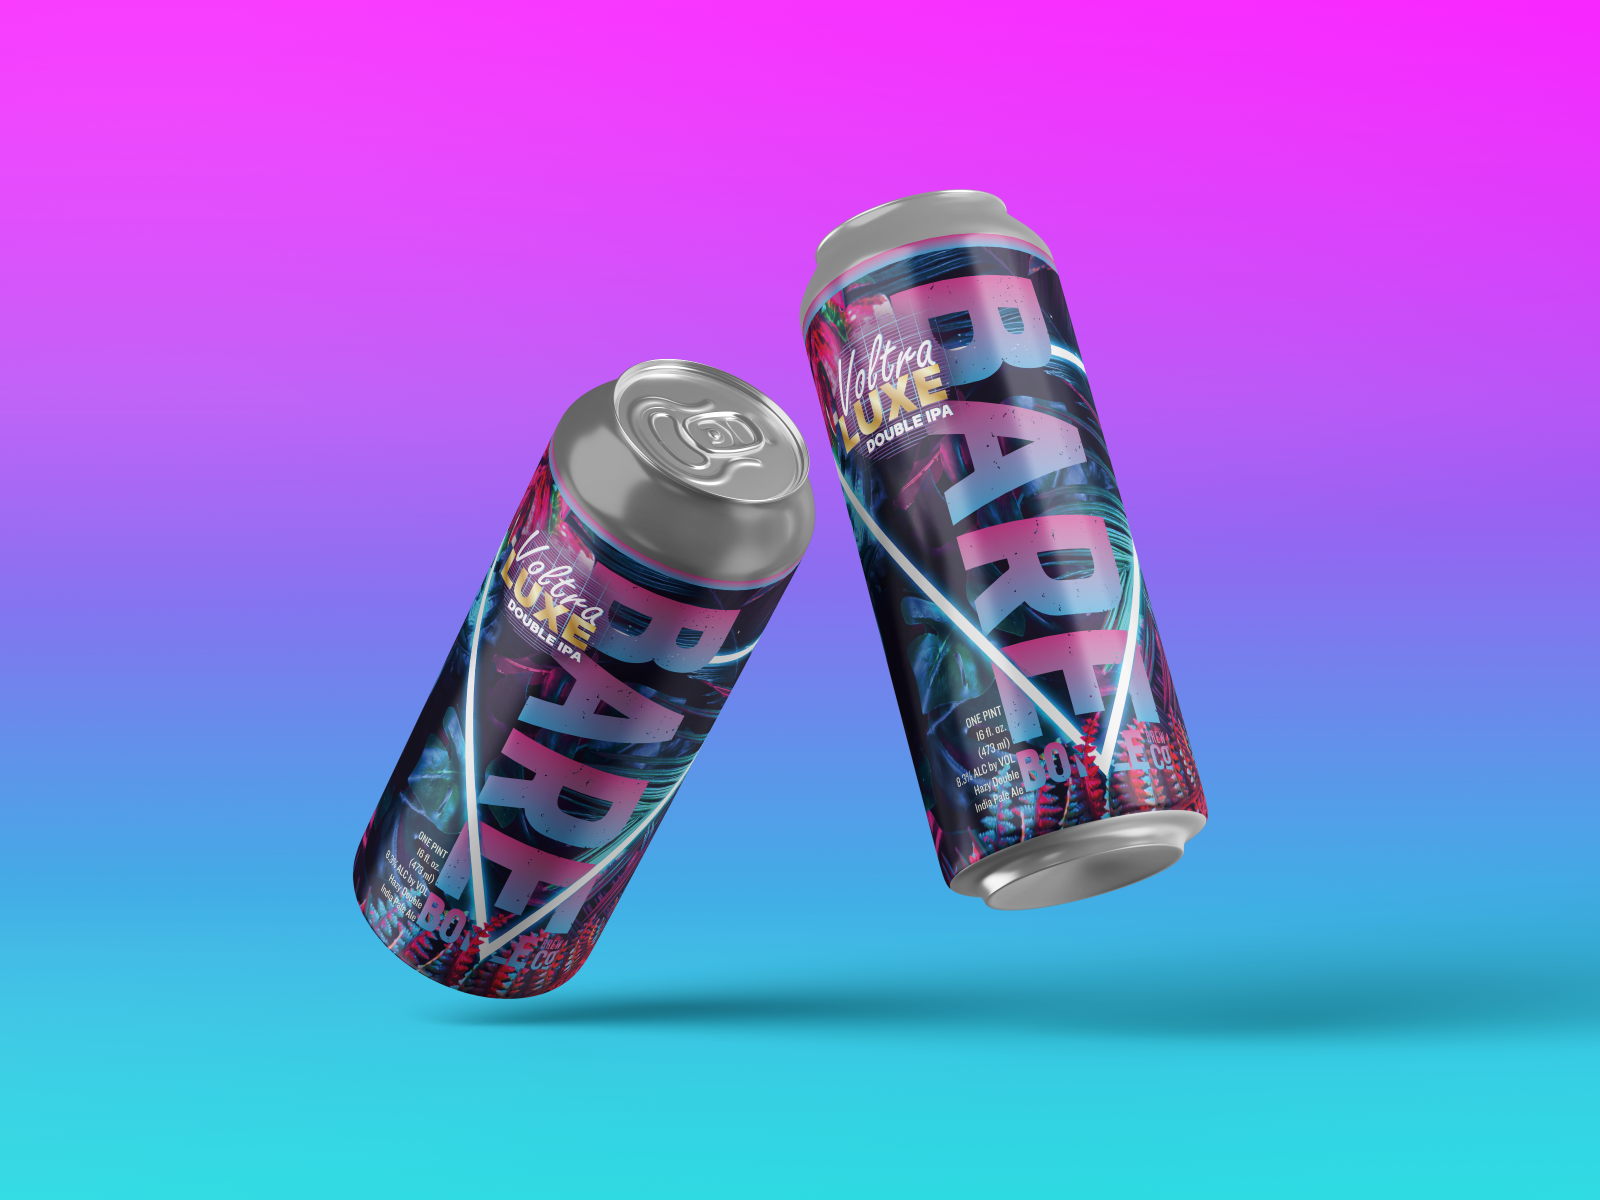 Voltra Luxe - Tropical Neon Craft Beer by Pine Watt on Dribbble